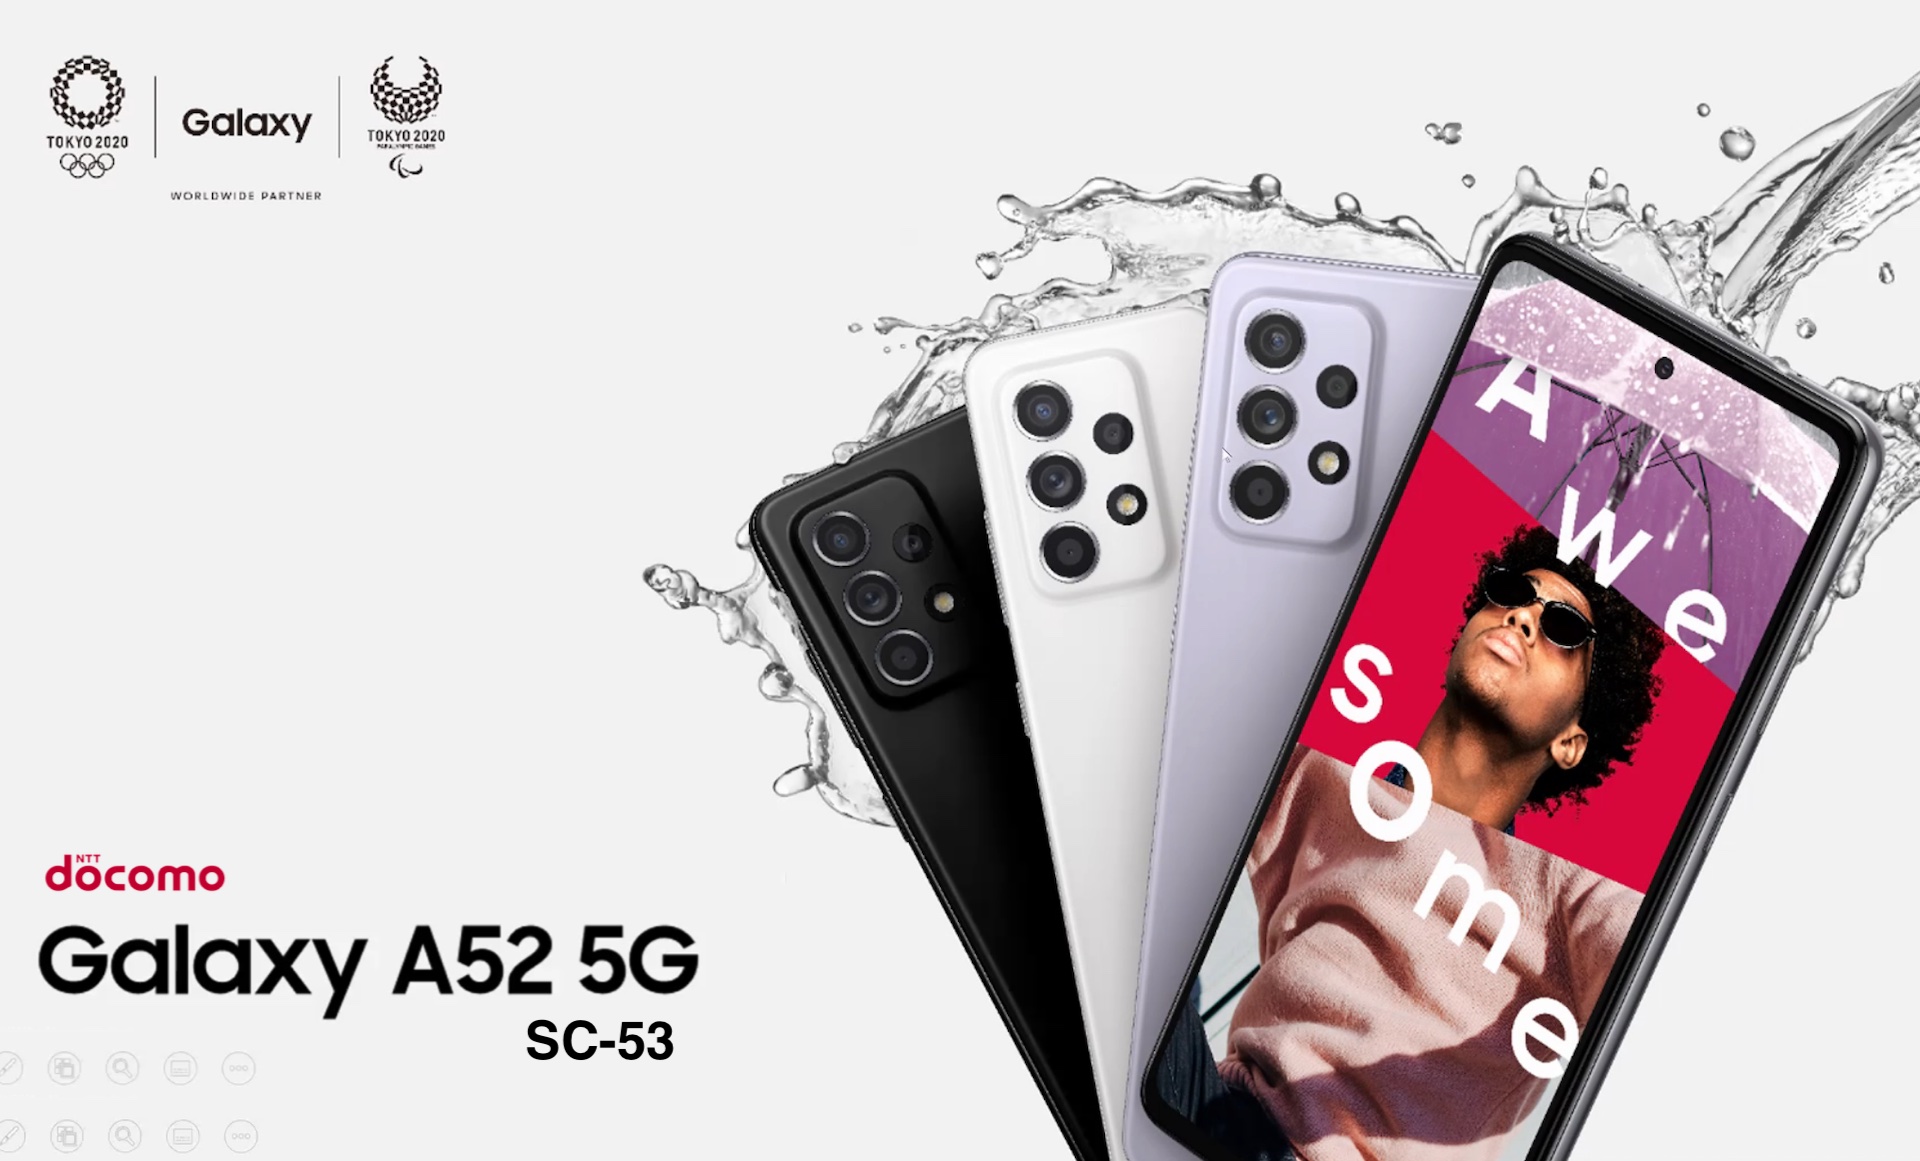 Nttドコモ Snapdragon 750g搭載スマホ Galaxy A52 5g Sc 53b を発表 防水 防塵やfelicaに対応 6月中旬発売 S Max